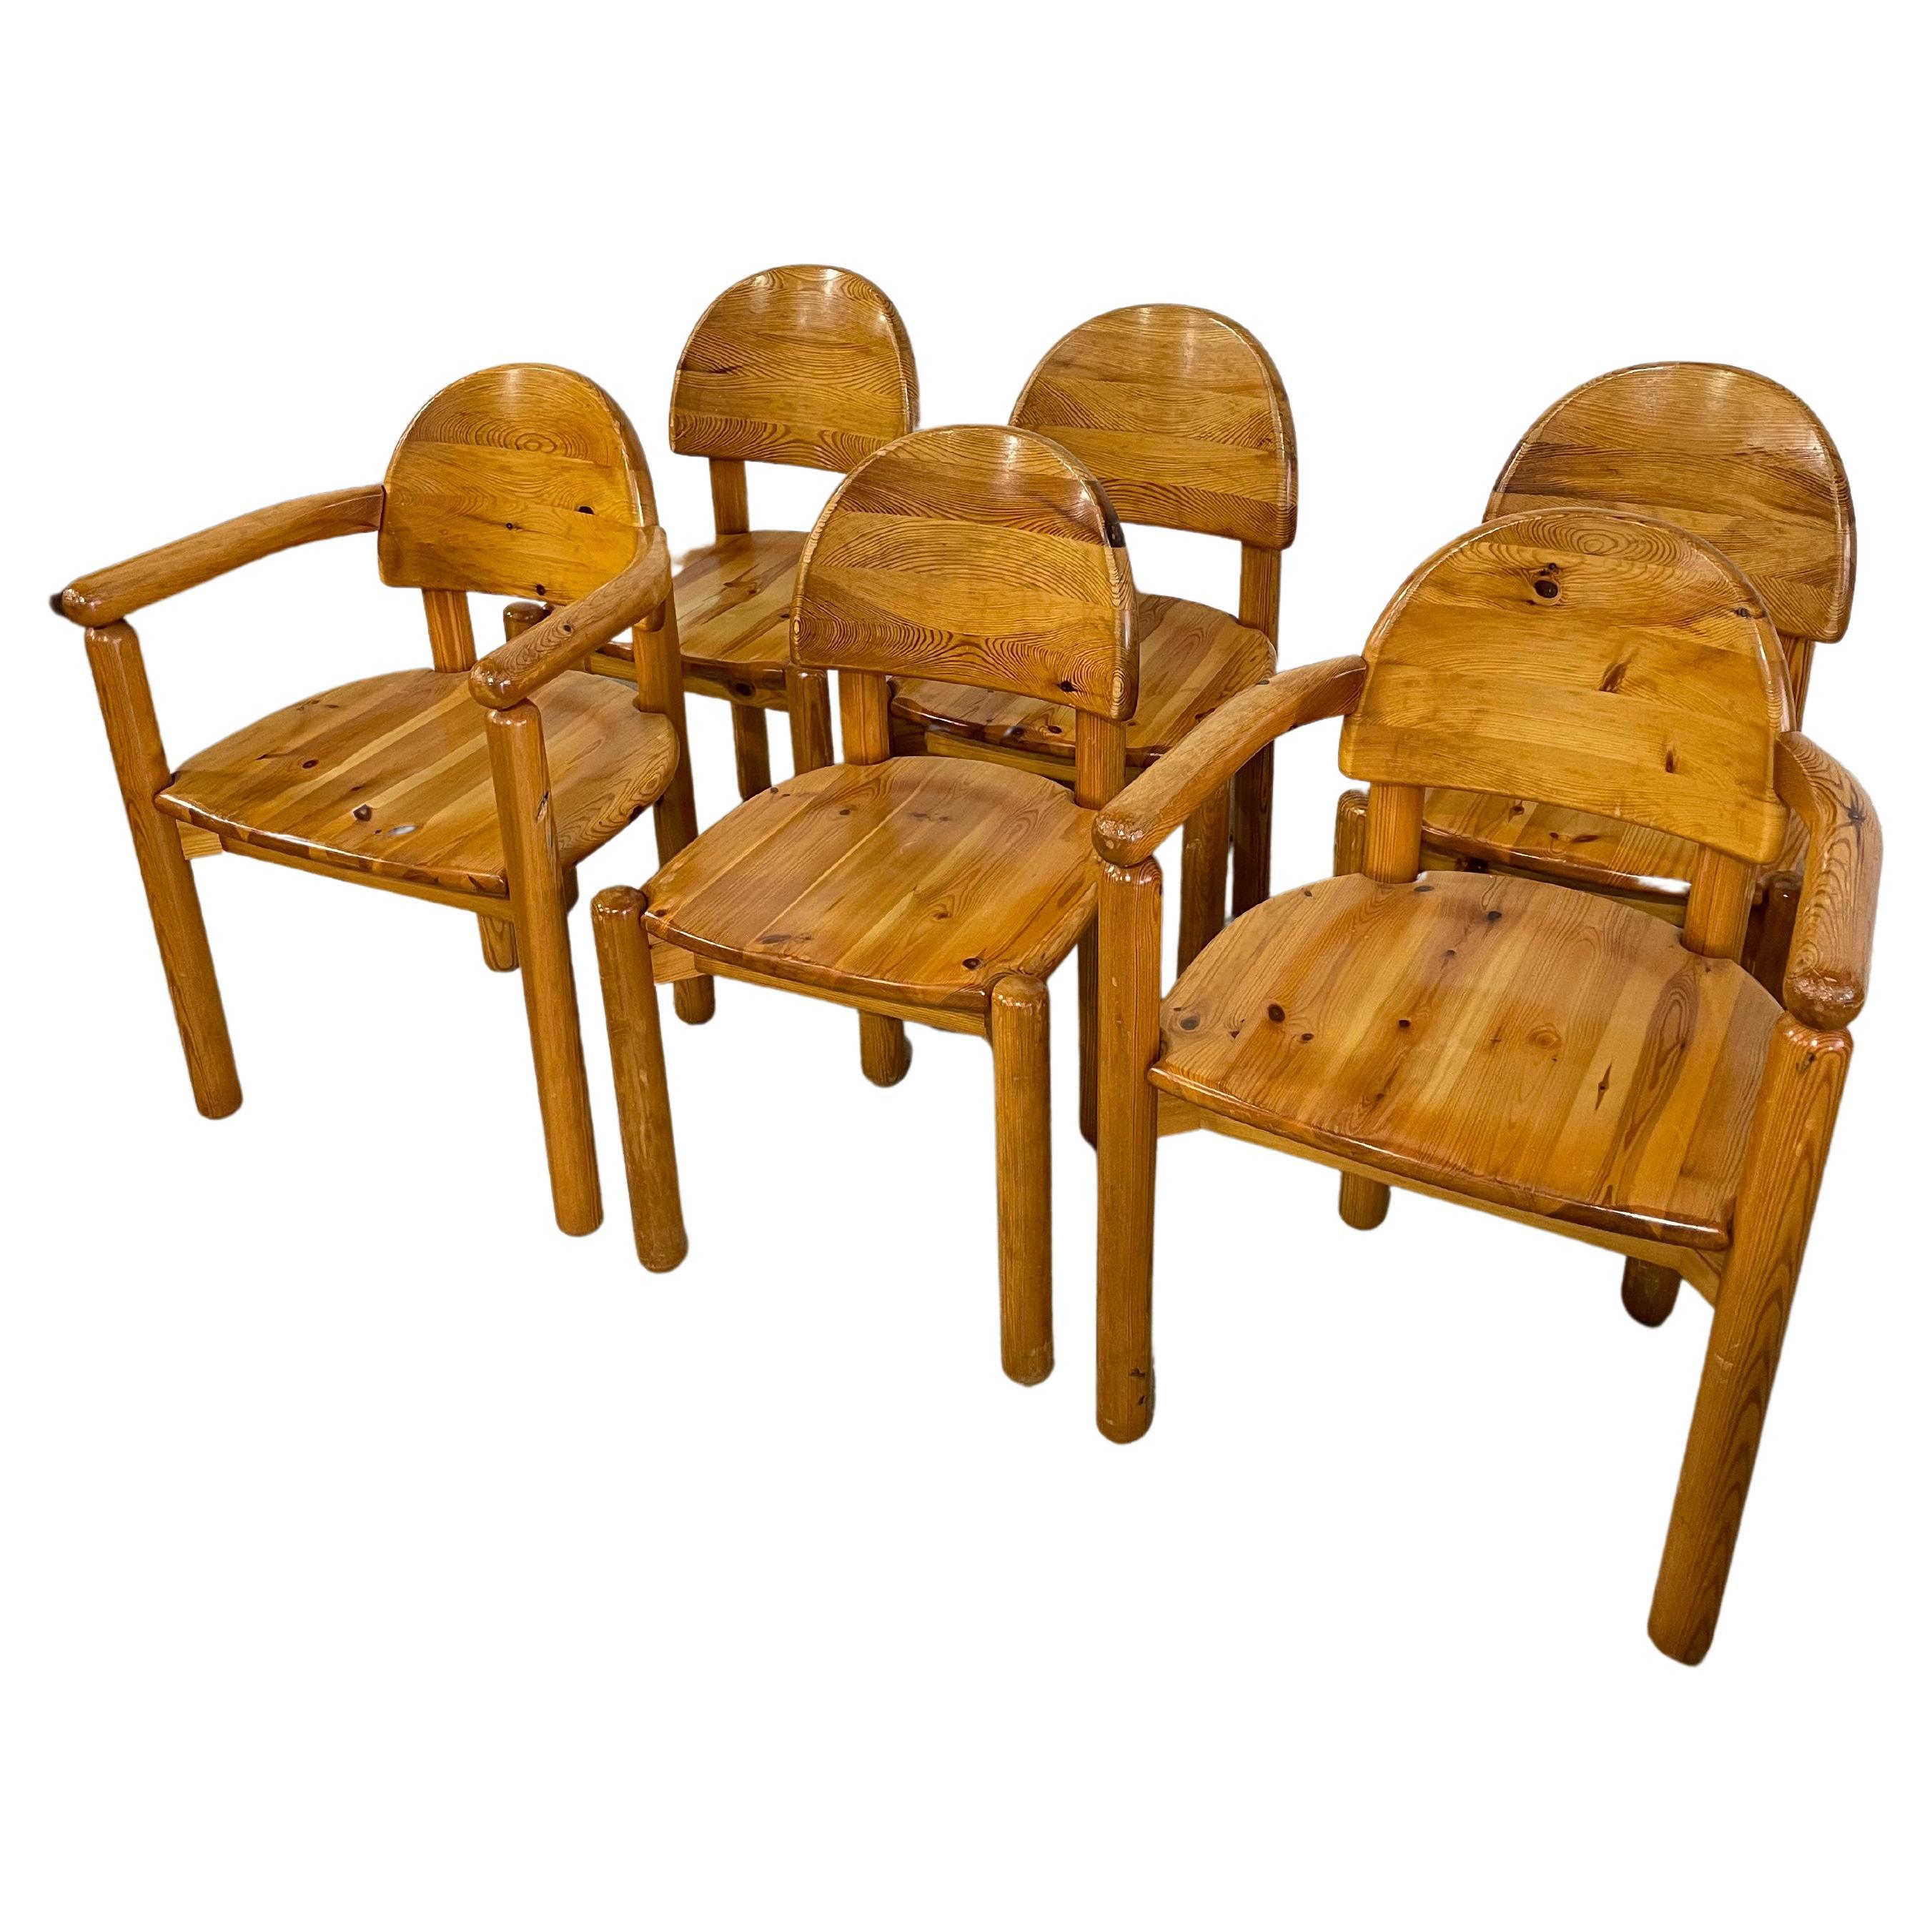 Mid-century by Rainer Daumiller chairs for Hirtshals Savvaerk, Denmark, 1970’s. Solid pine. Set of 6. 2 Arm chairs and 4 side chairs.
Arm chairs 22.5 W 20 D 32 H 17.5 seat
Side chairs 19 W 18 D 32 H 17.5 seat